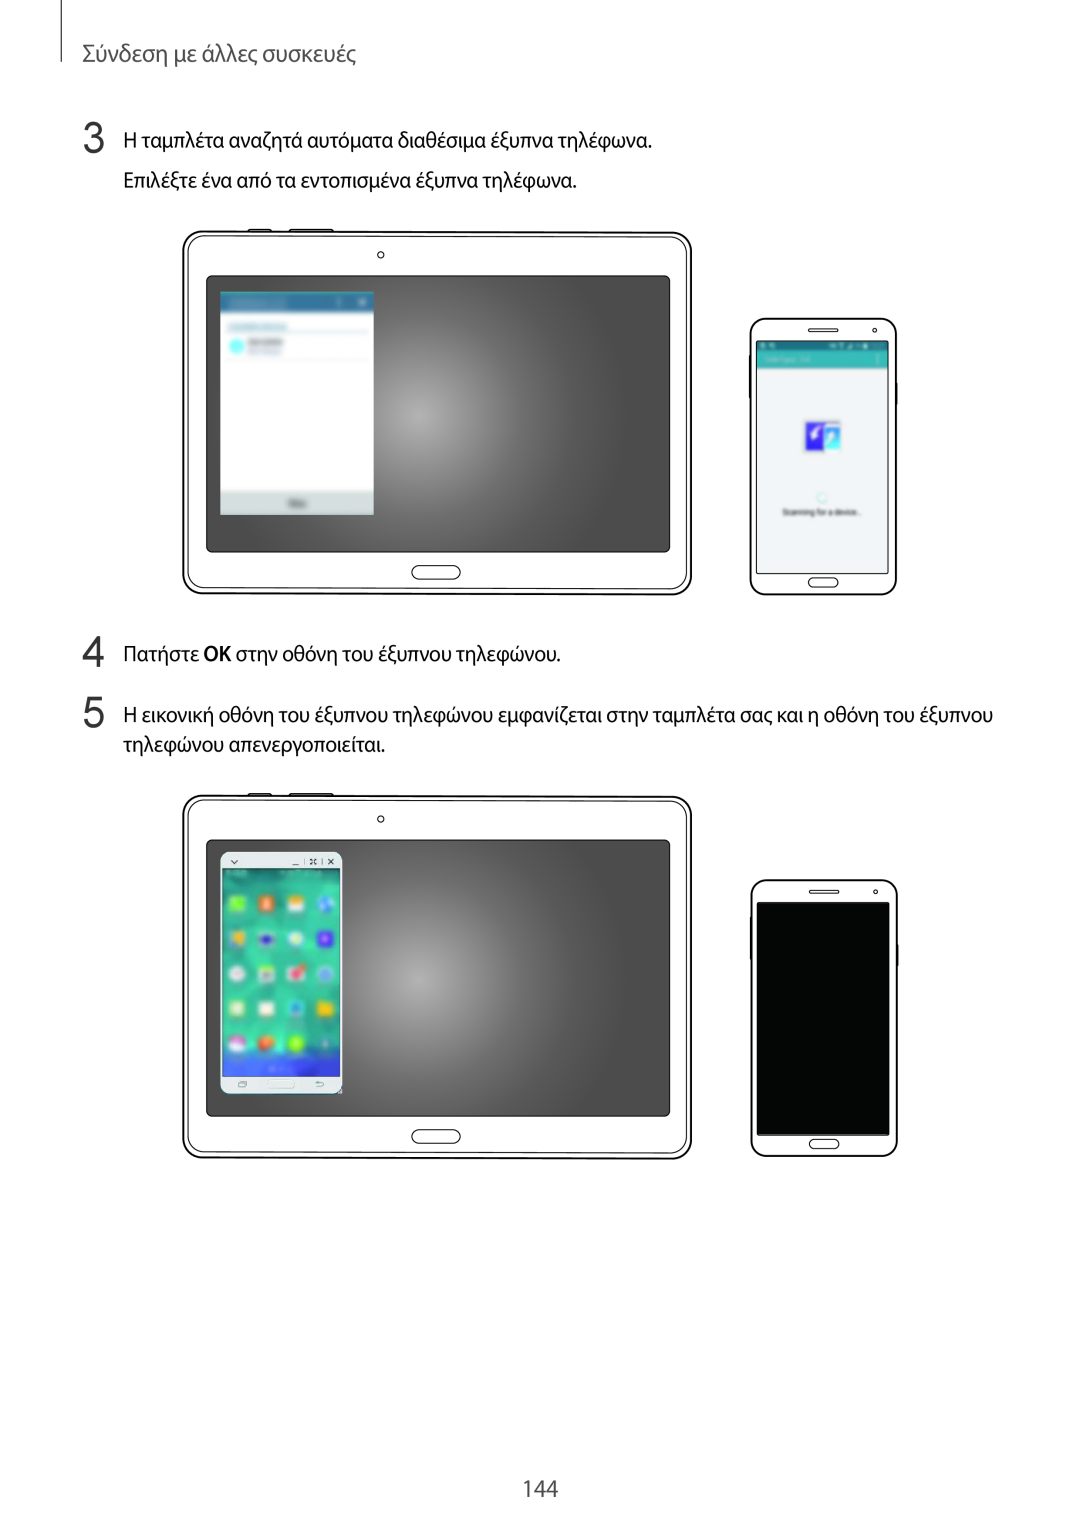 Samsung SM-T805NTSAEUR, SM-T805NZWAEUR manual Σύνδεση με άλλες συσκευές, Πατήστε OK στην οθόνη του έξυπνου τηλεφώνου 